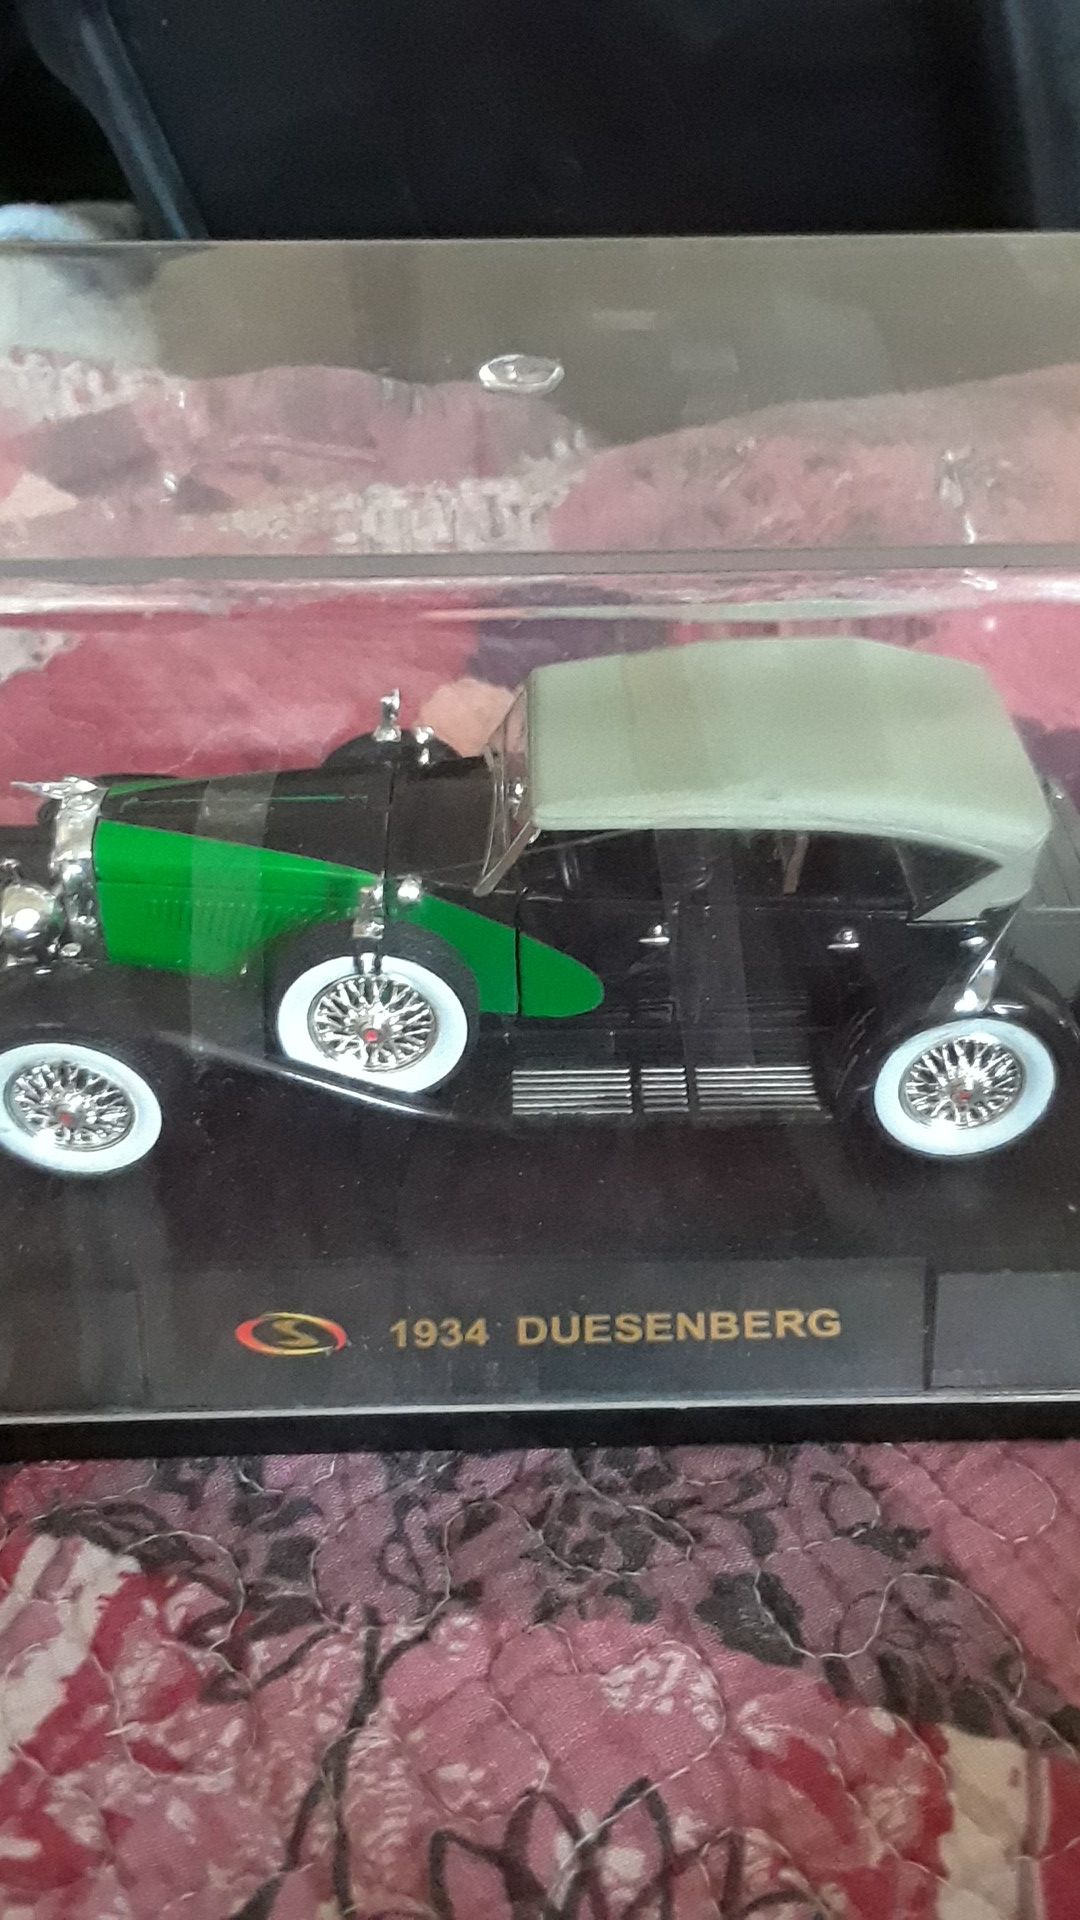 Duesenberg 1934 model car